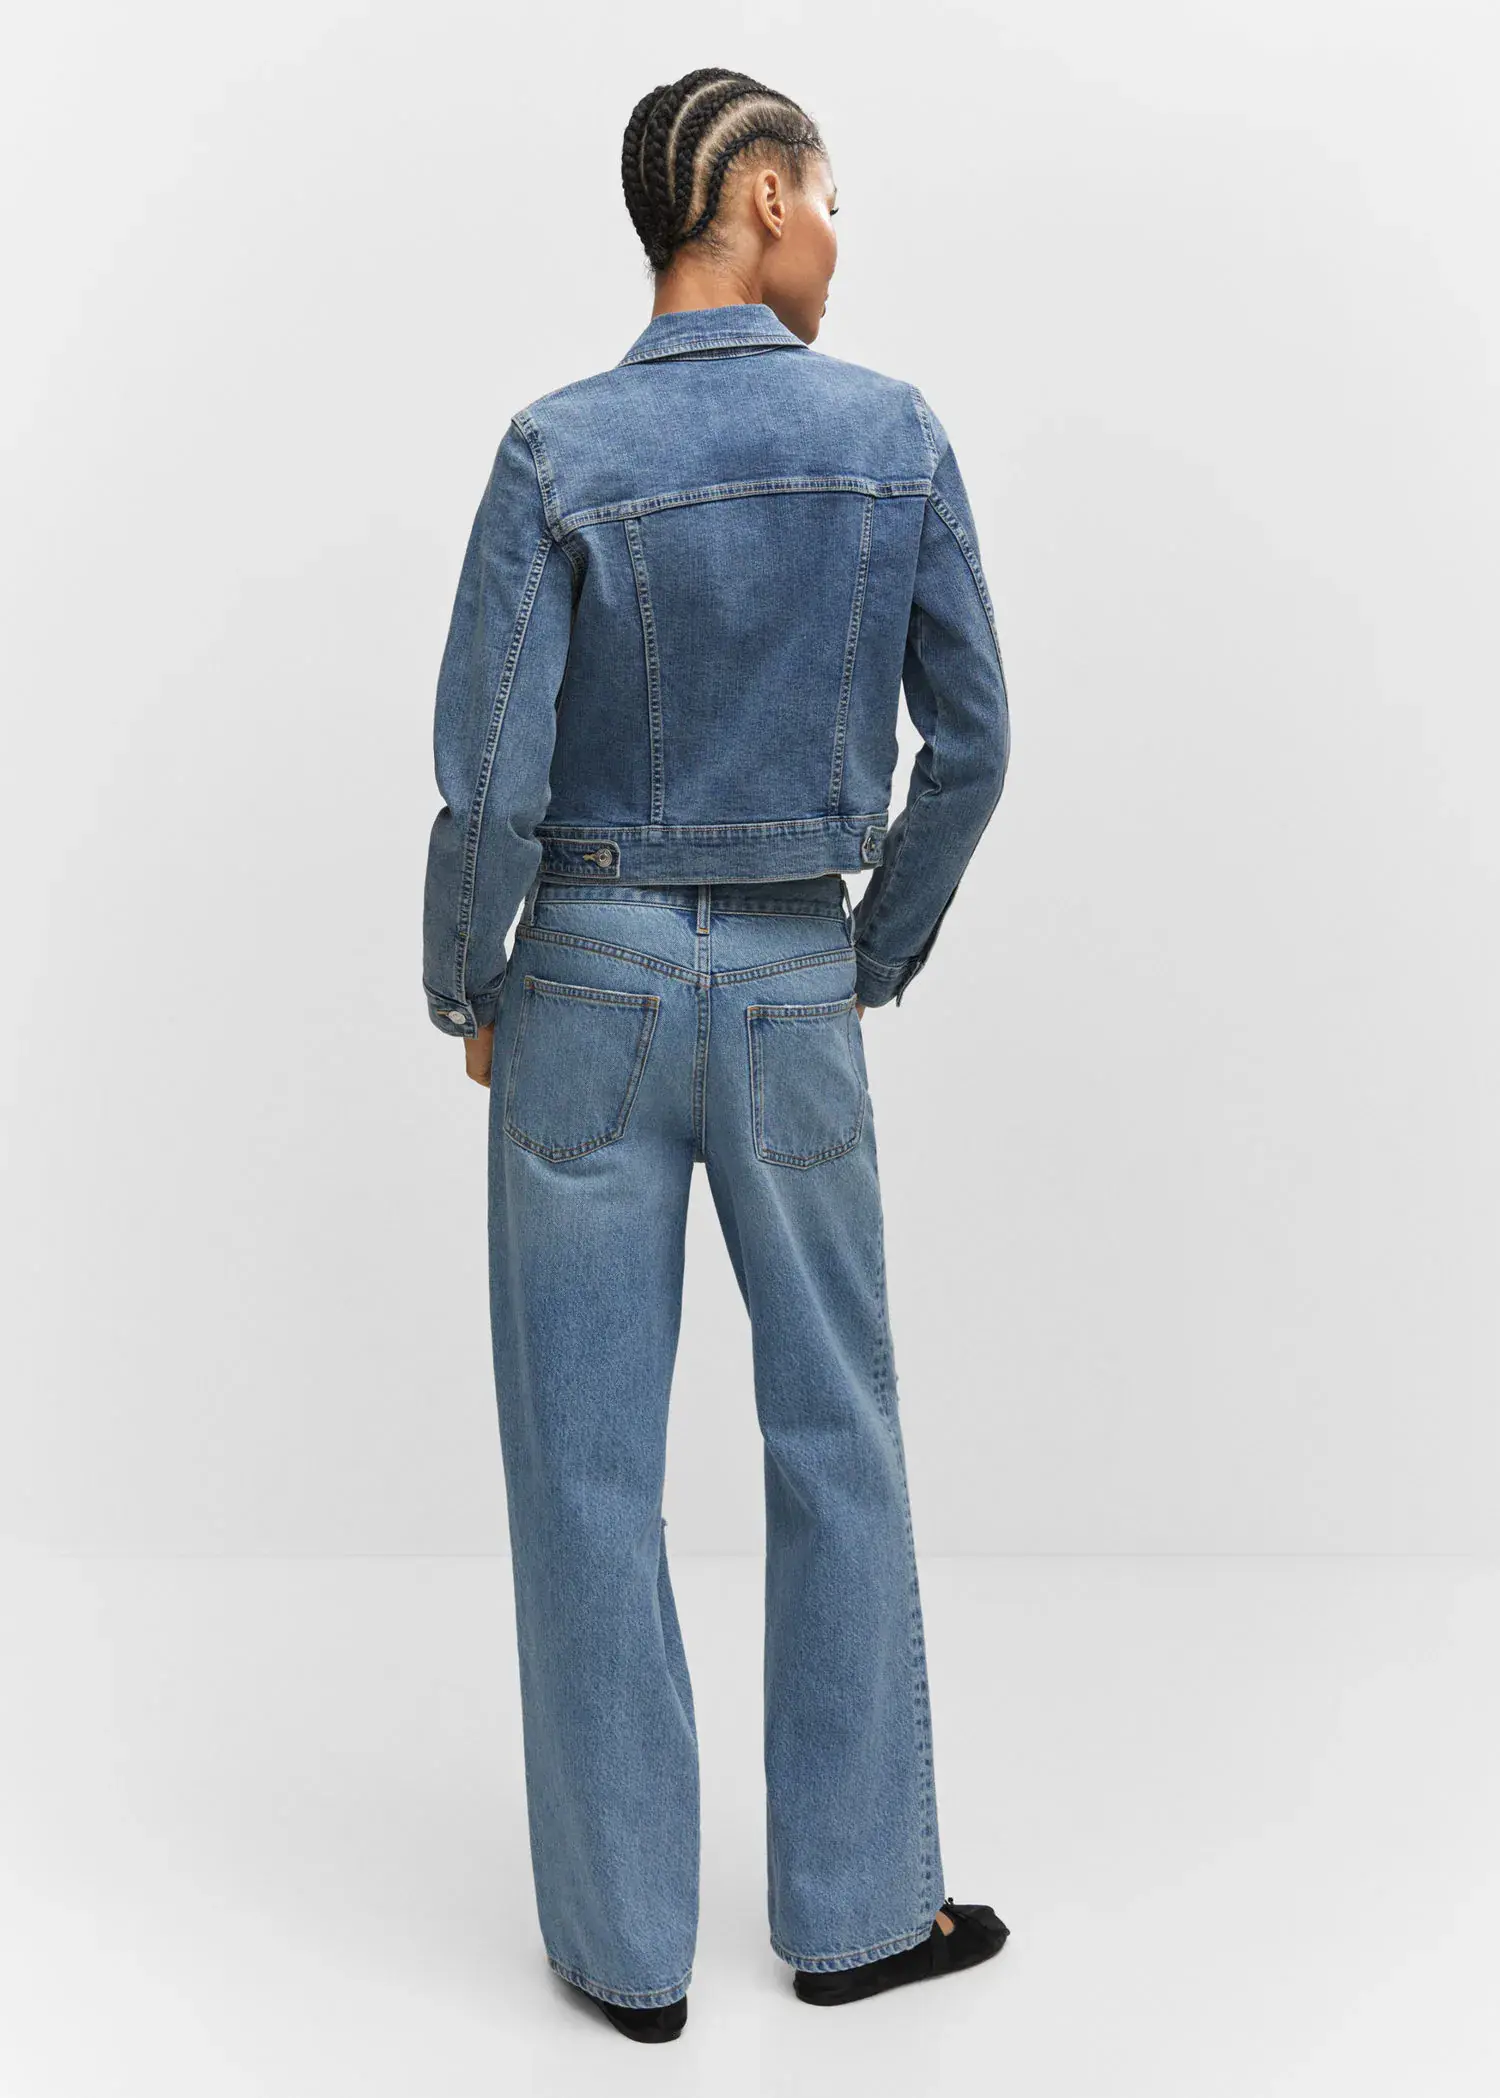 Mango Pocketed denim jacket. a man wearing a denim jacket and jeans. 